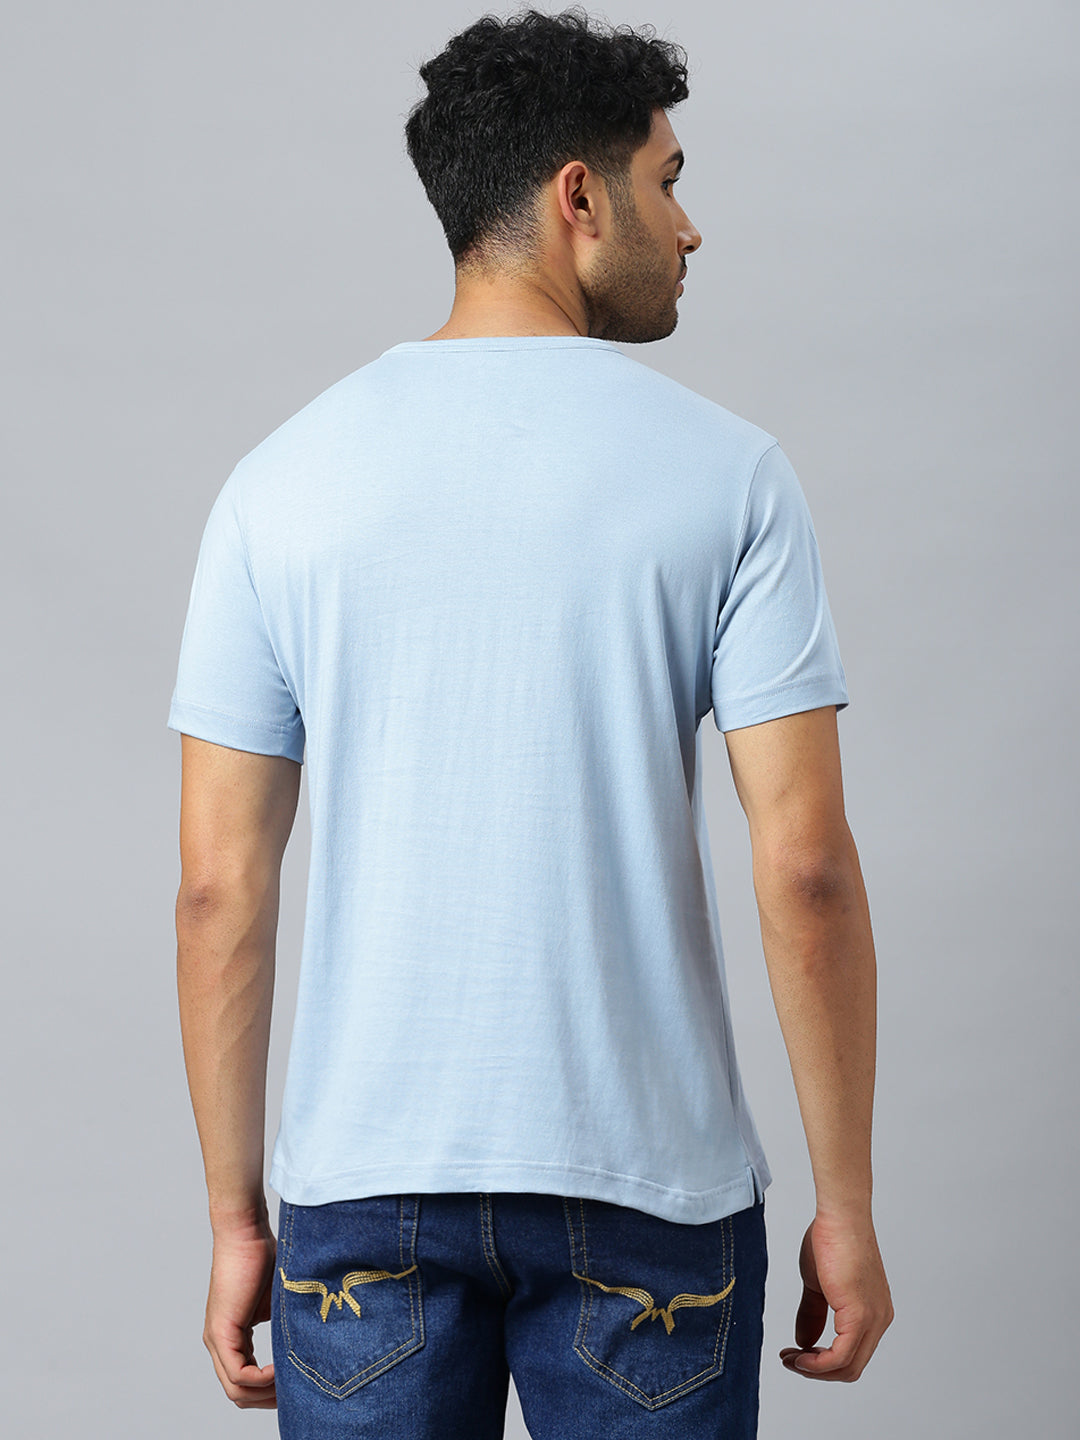 Don Vino Men's Solid Florentine Blue Crew Neck T-Shirt